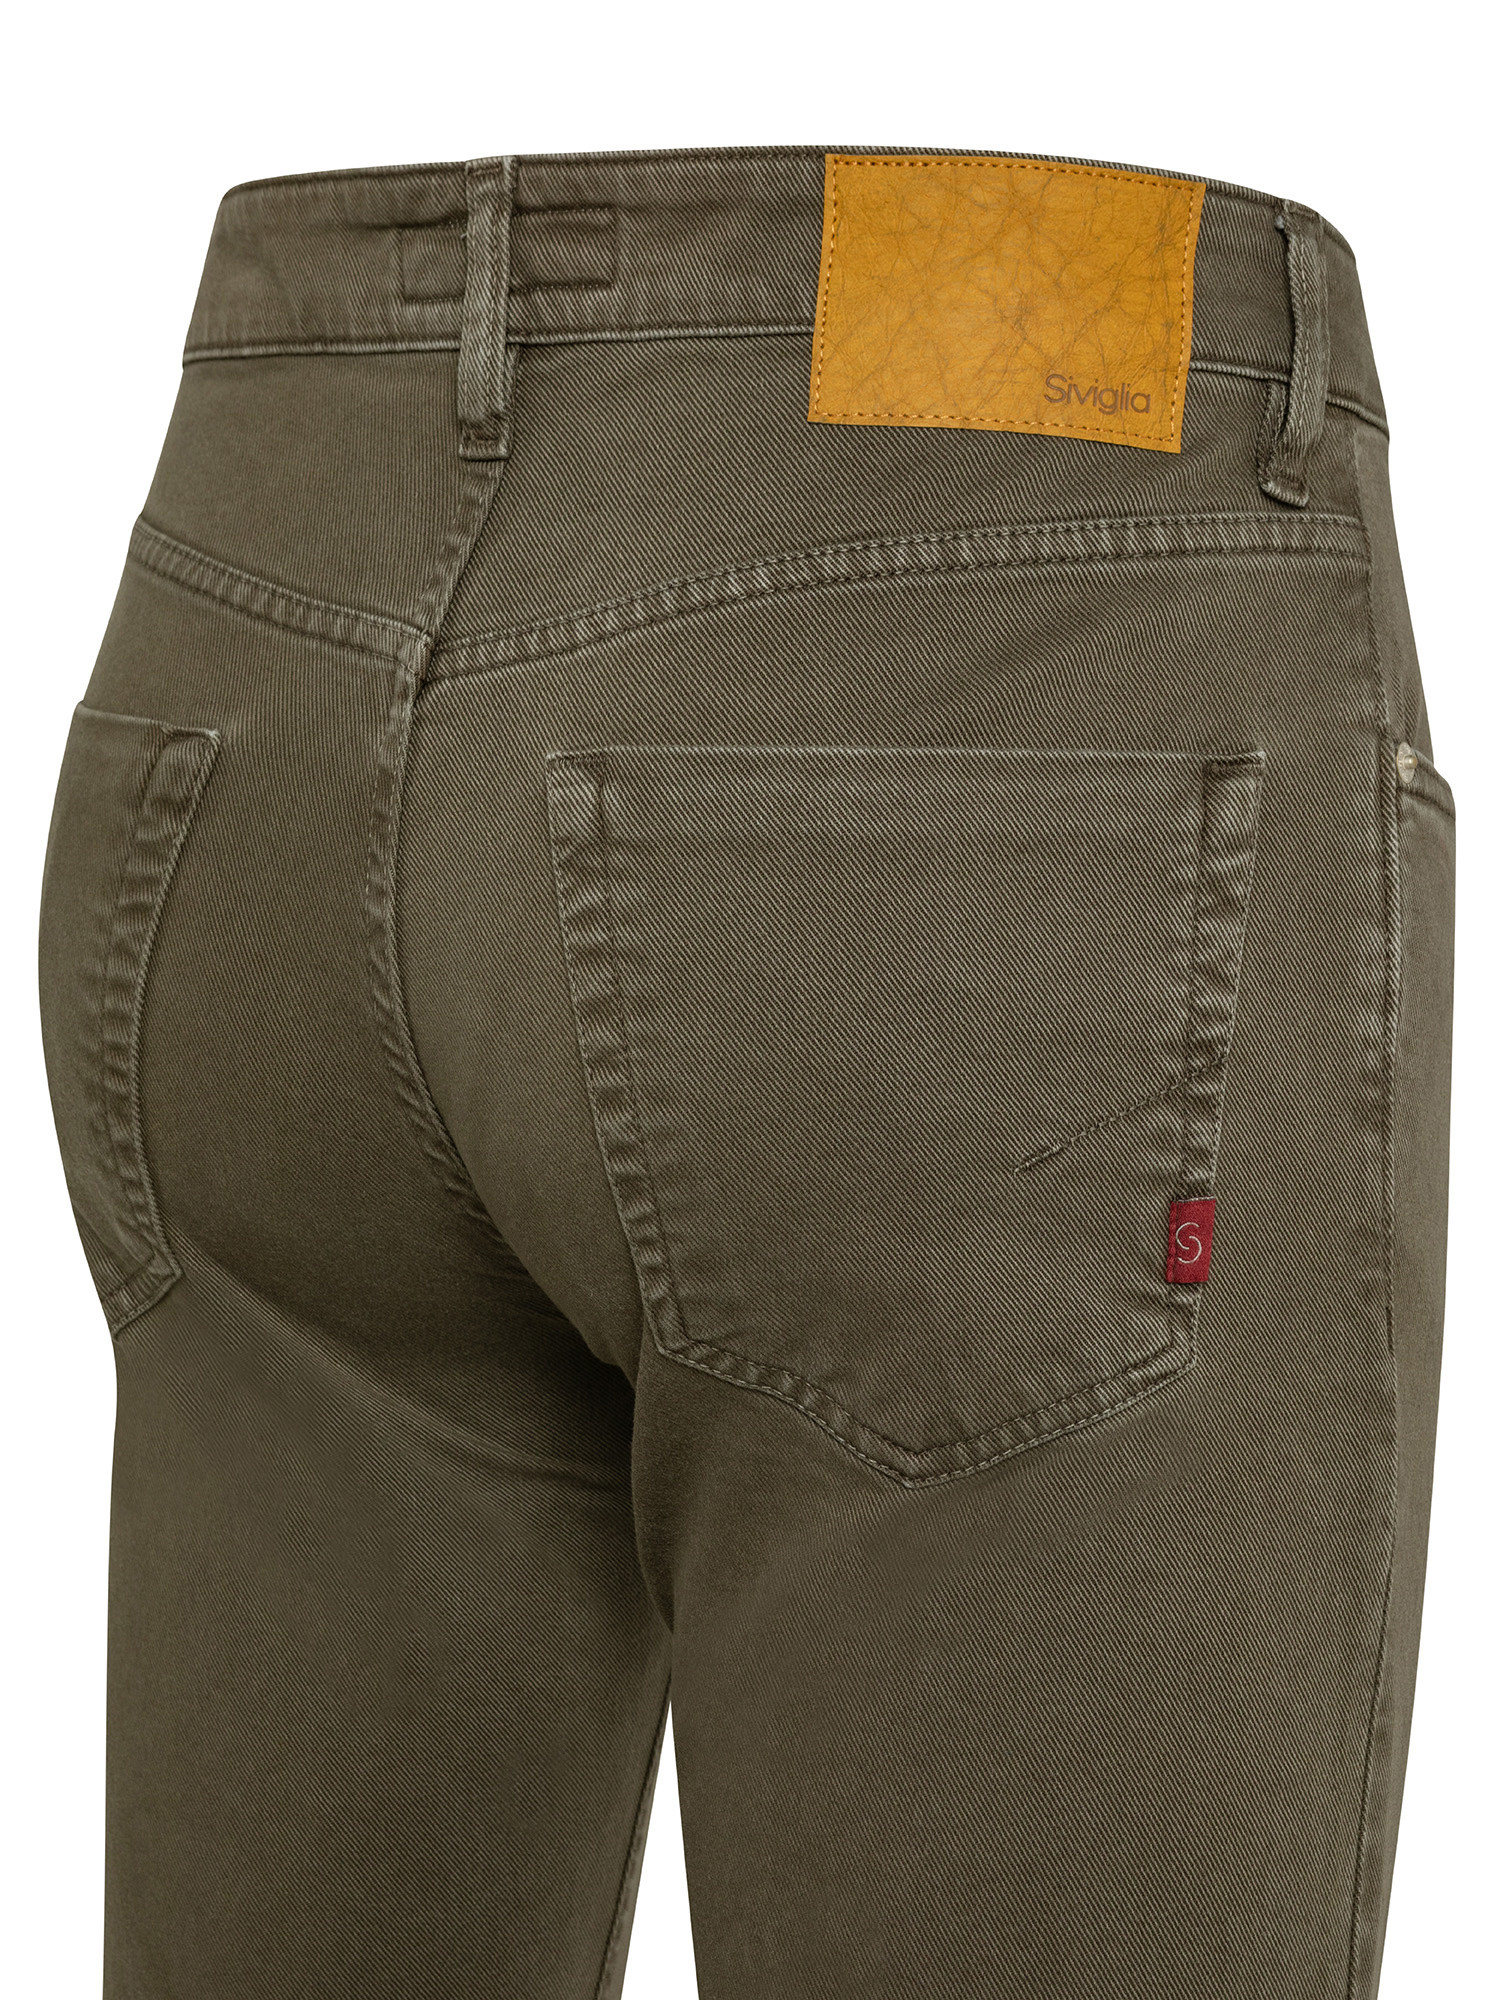 5 pocket denim trousers, Brown, large image number 2